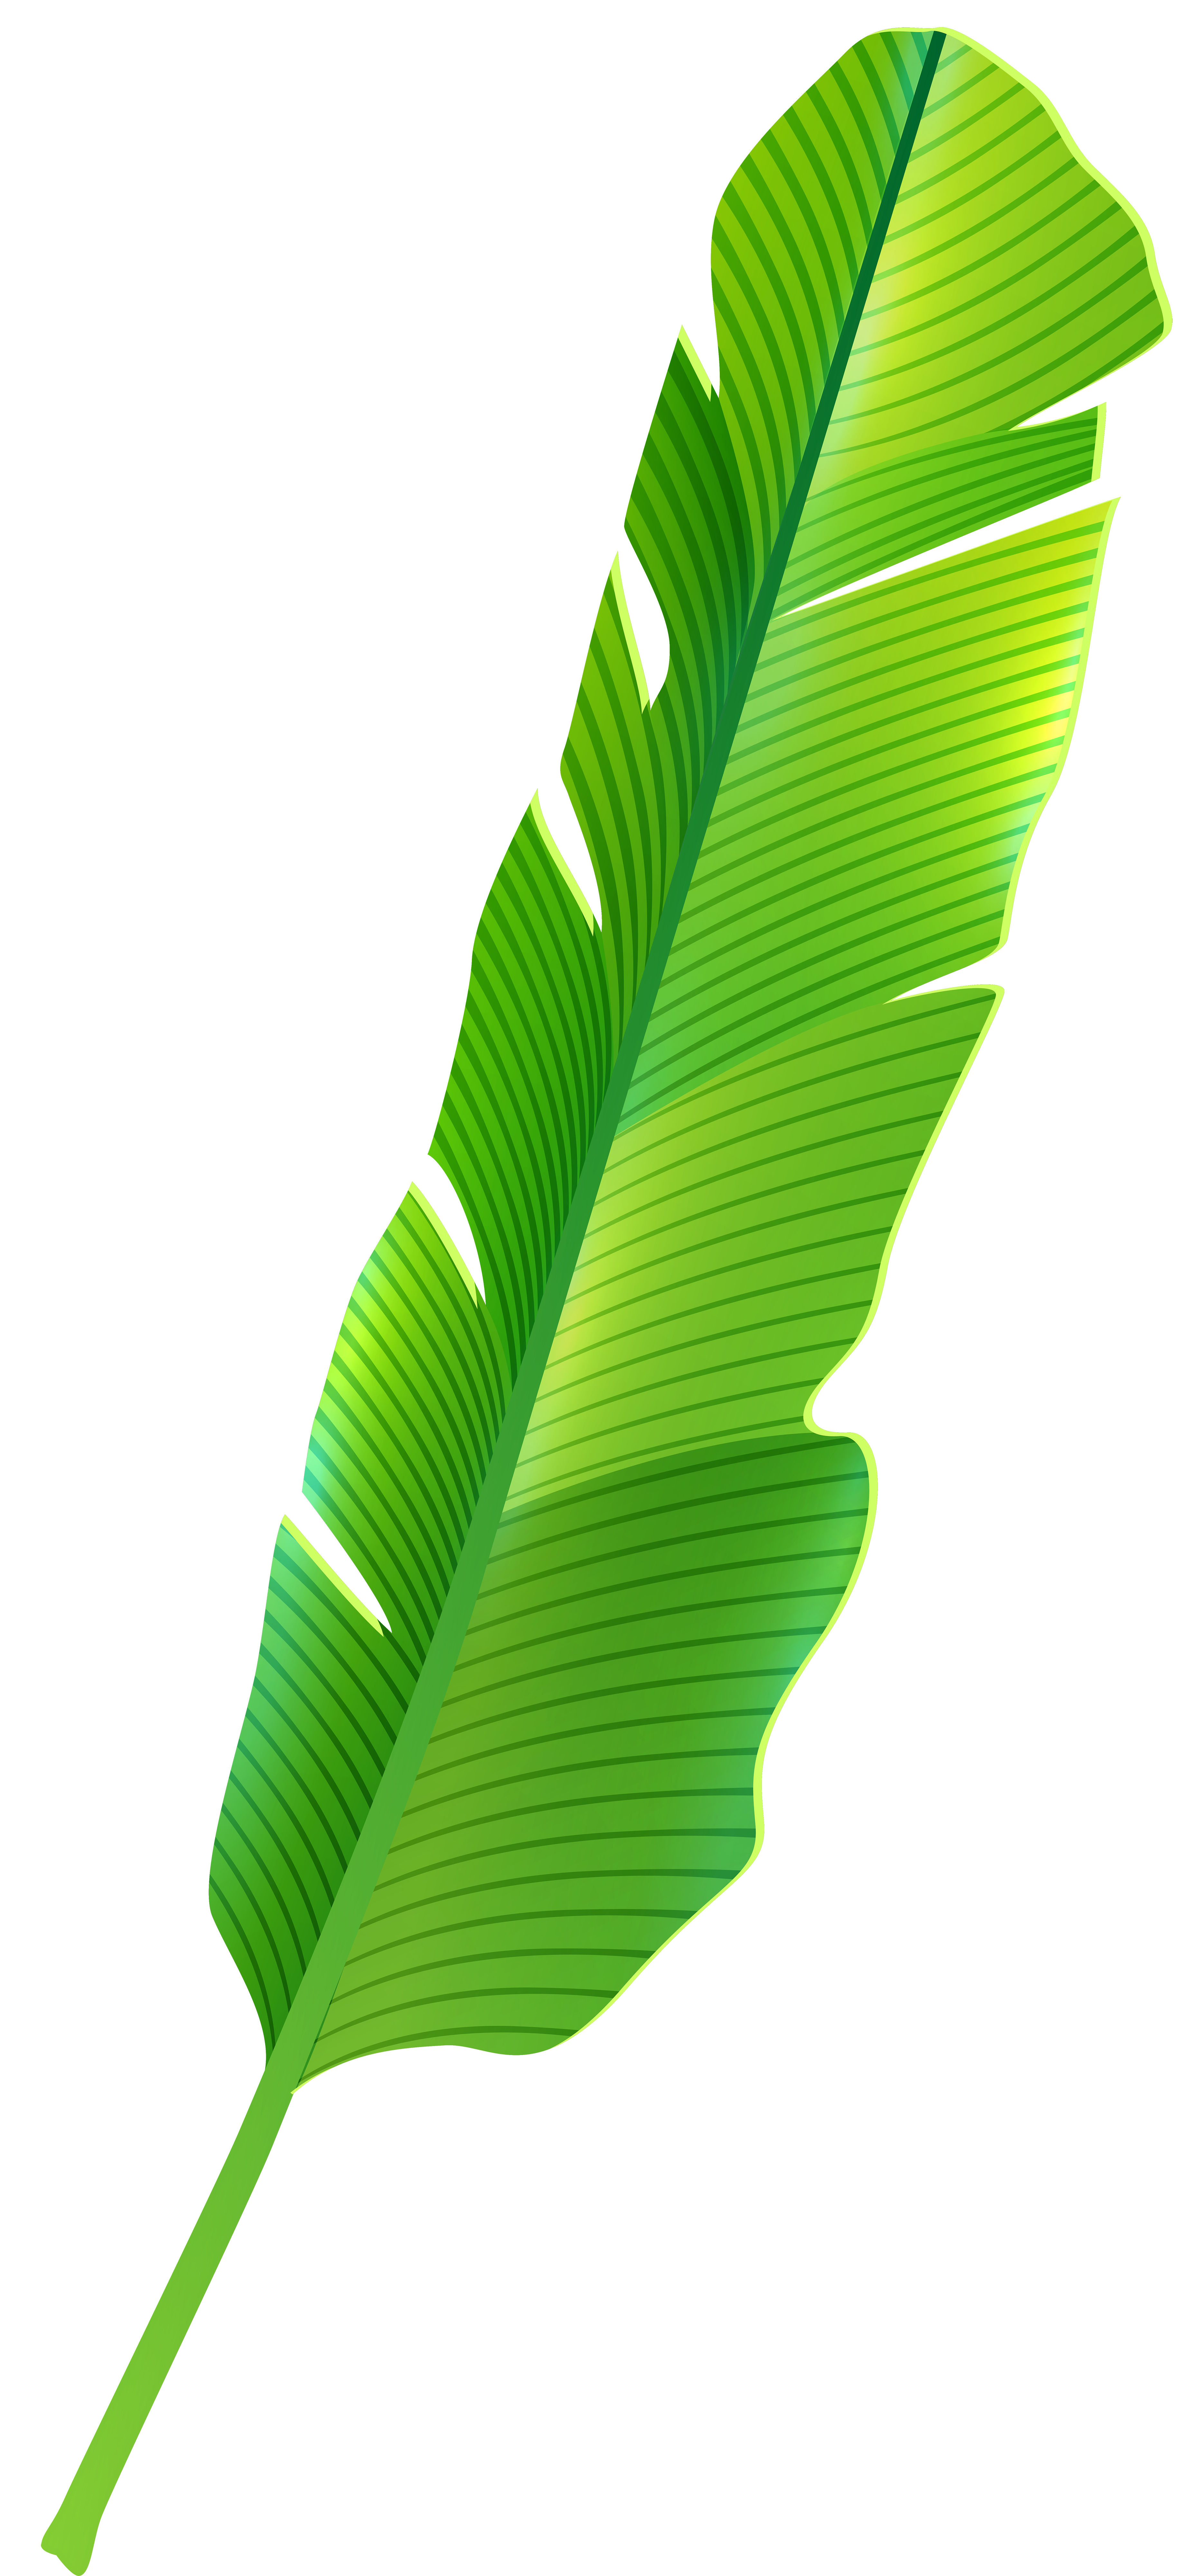 Website clipart commercialization. Tropical leaf png clip